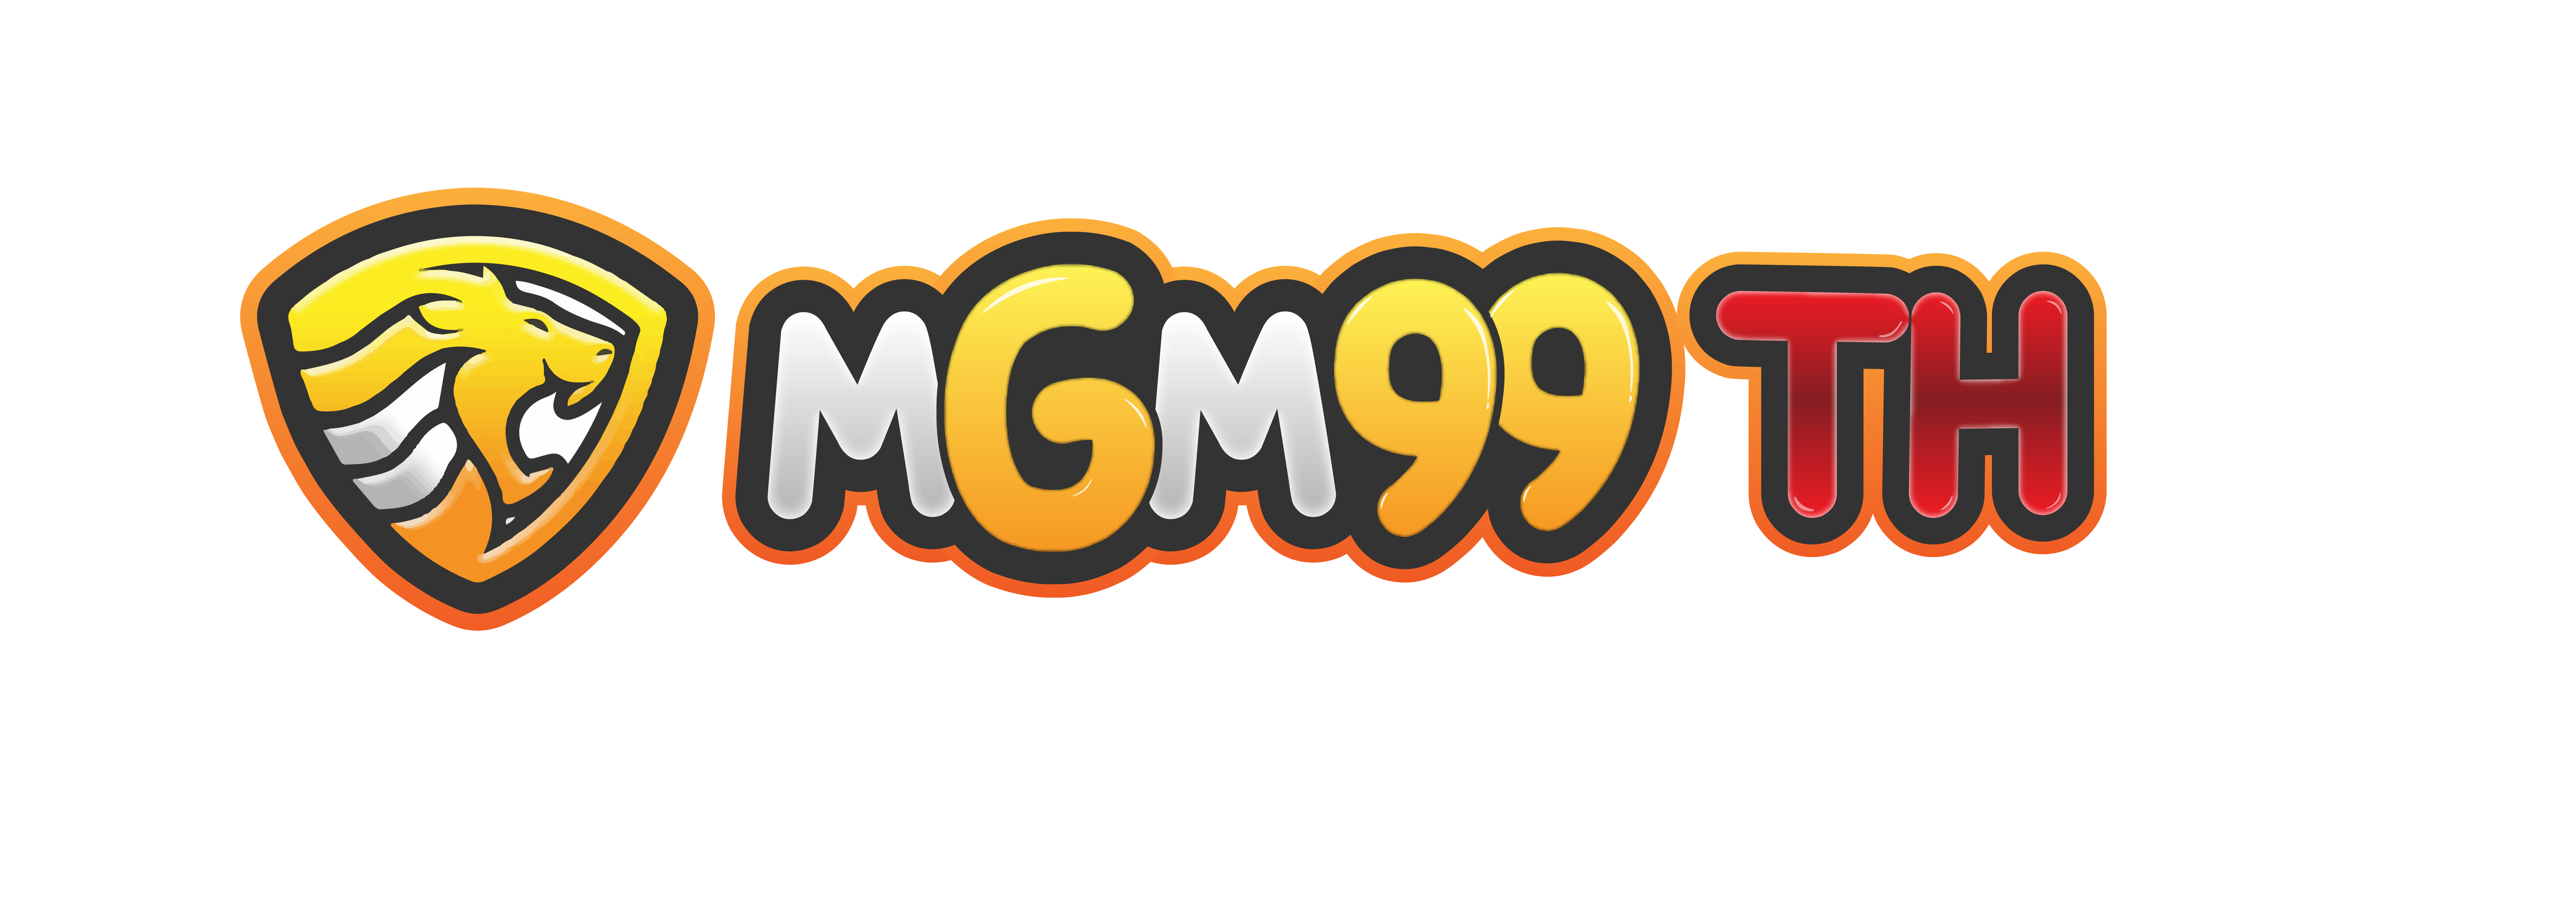 MGM99TH